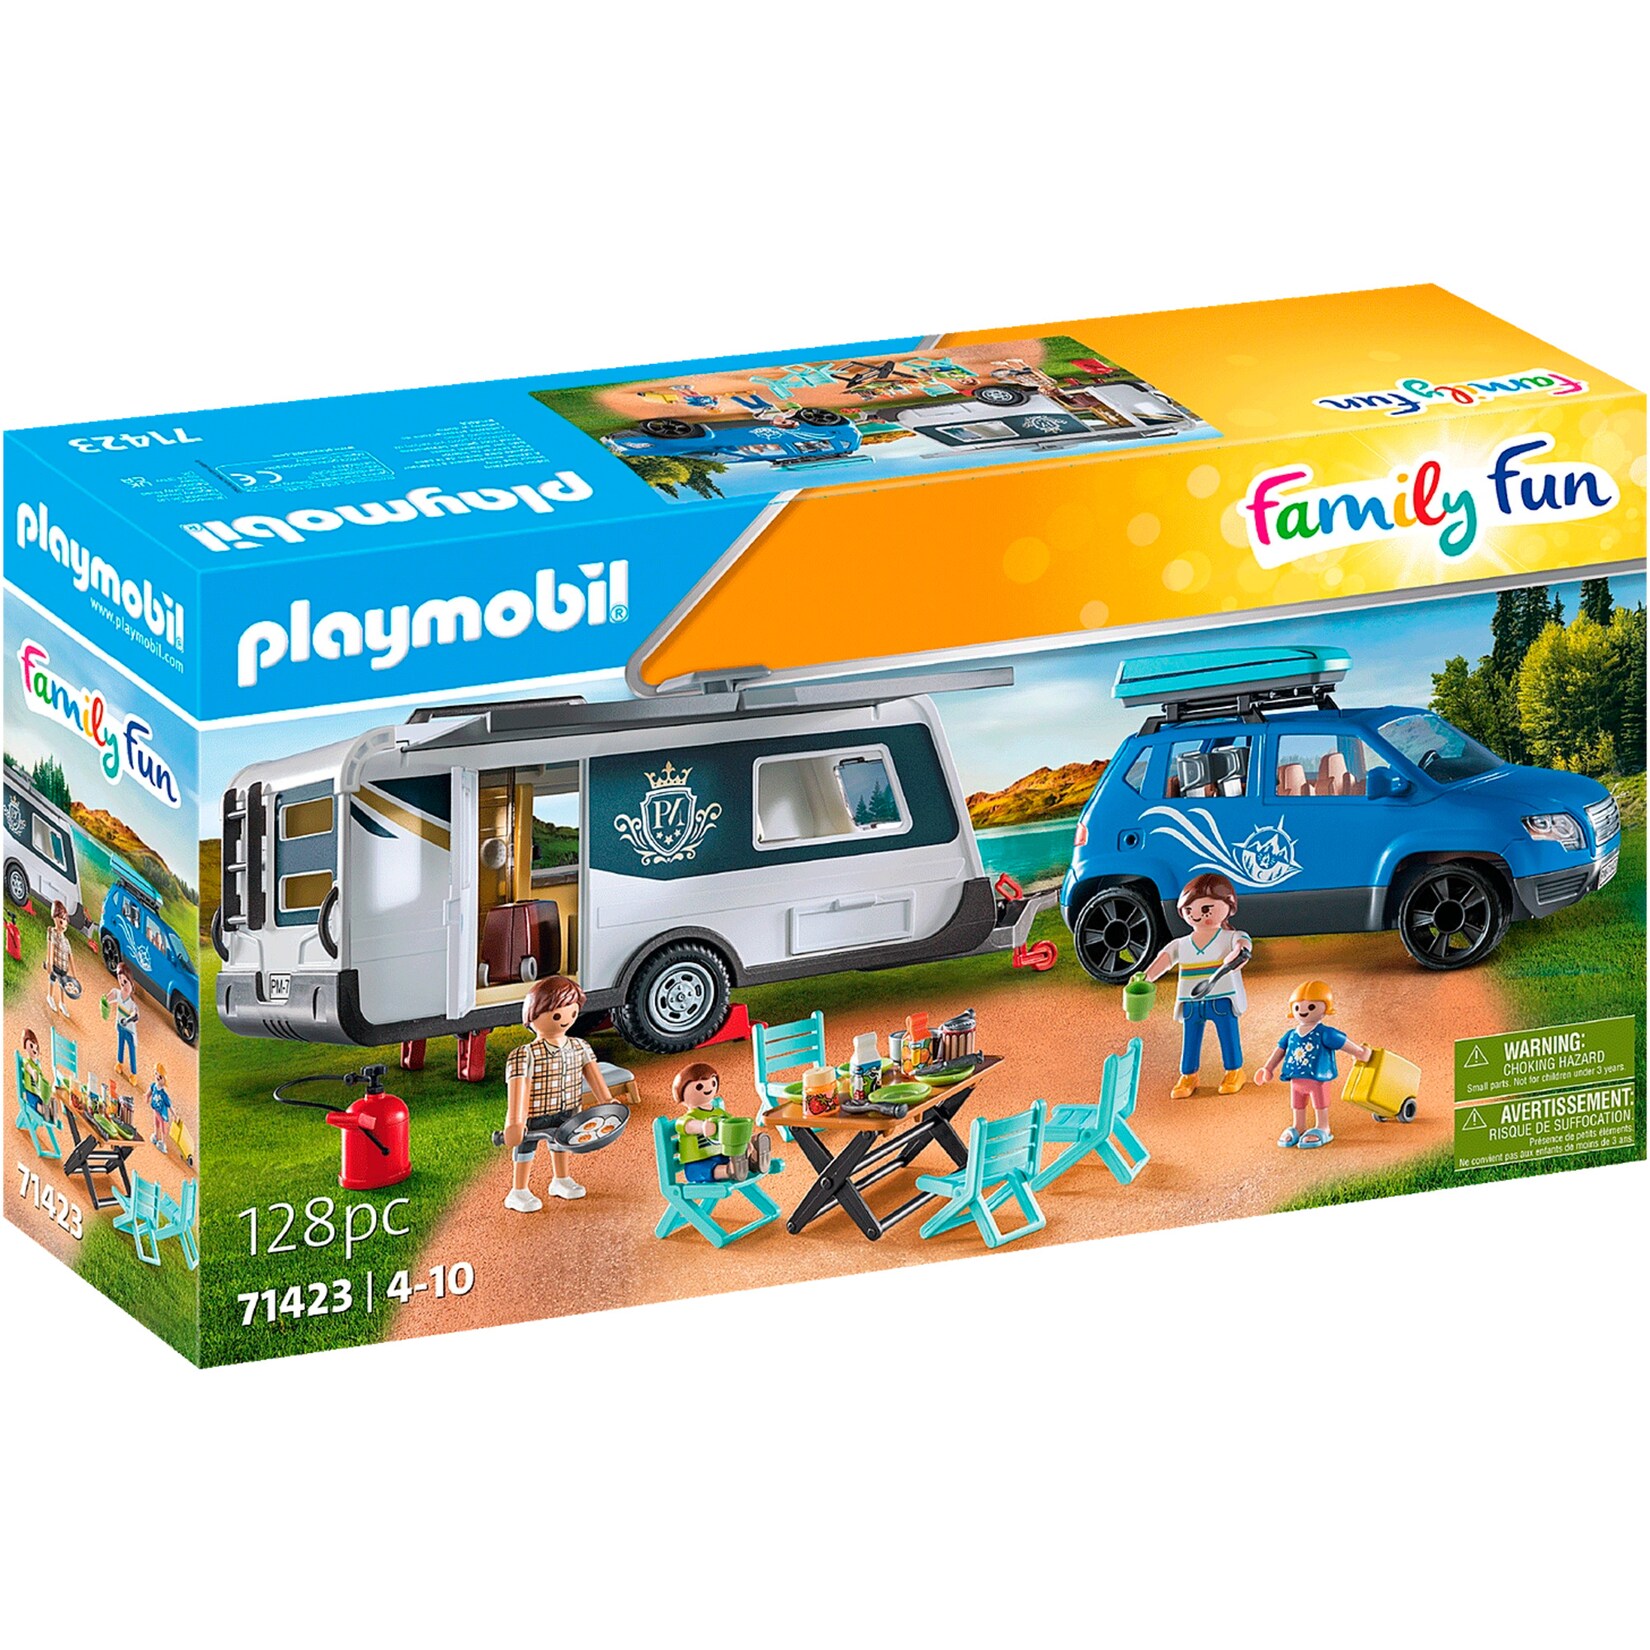 PLAYMOBIL Konstruktionsspielzeug Family Fun Wohnwagen mit Auto